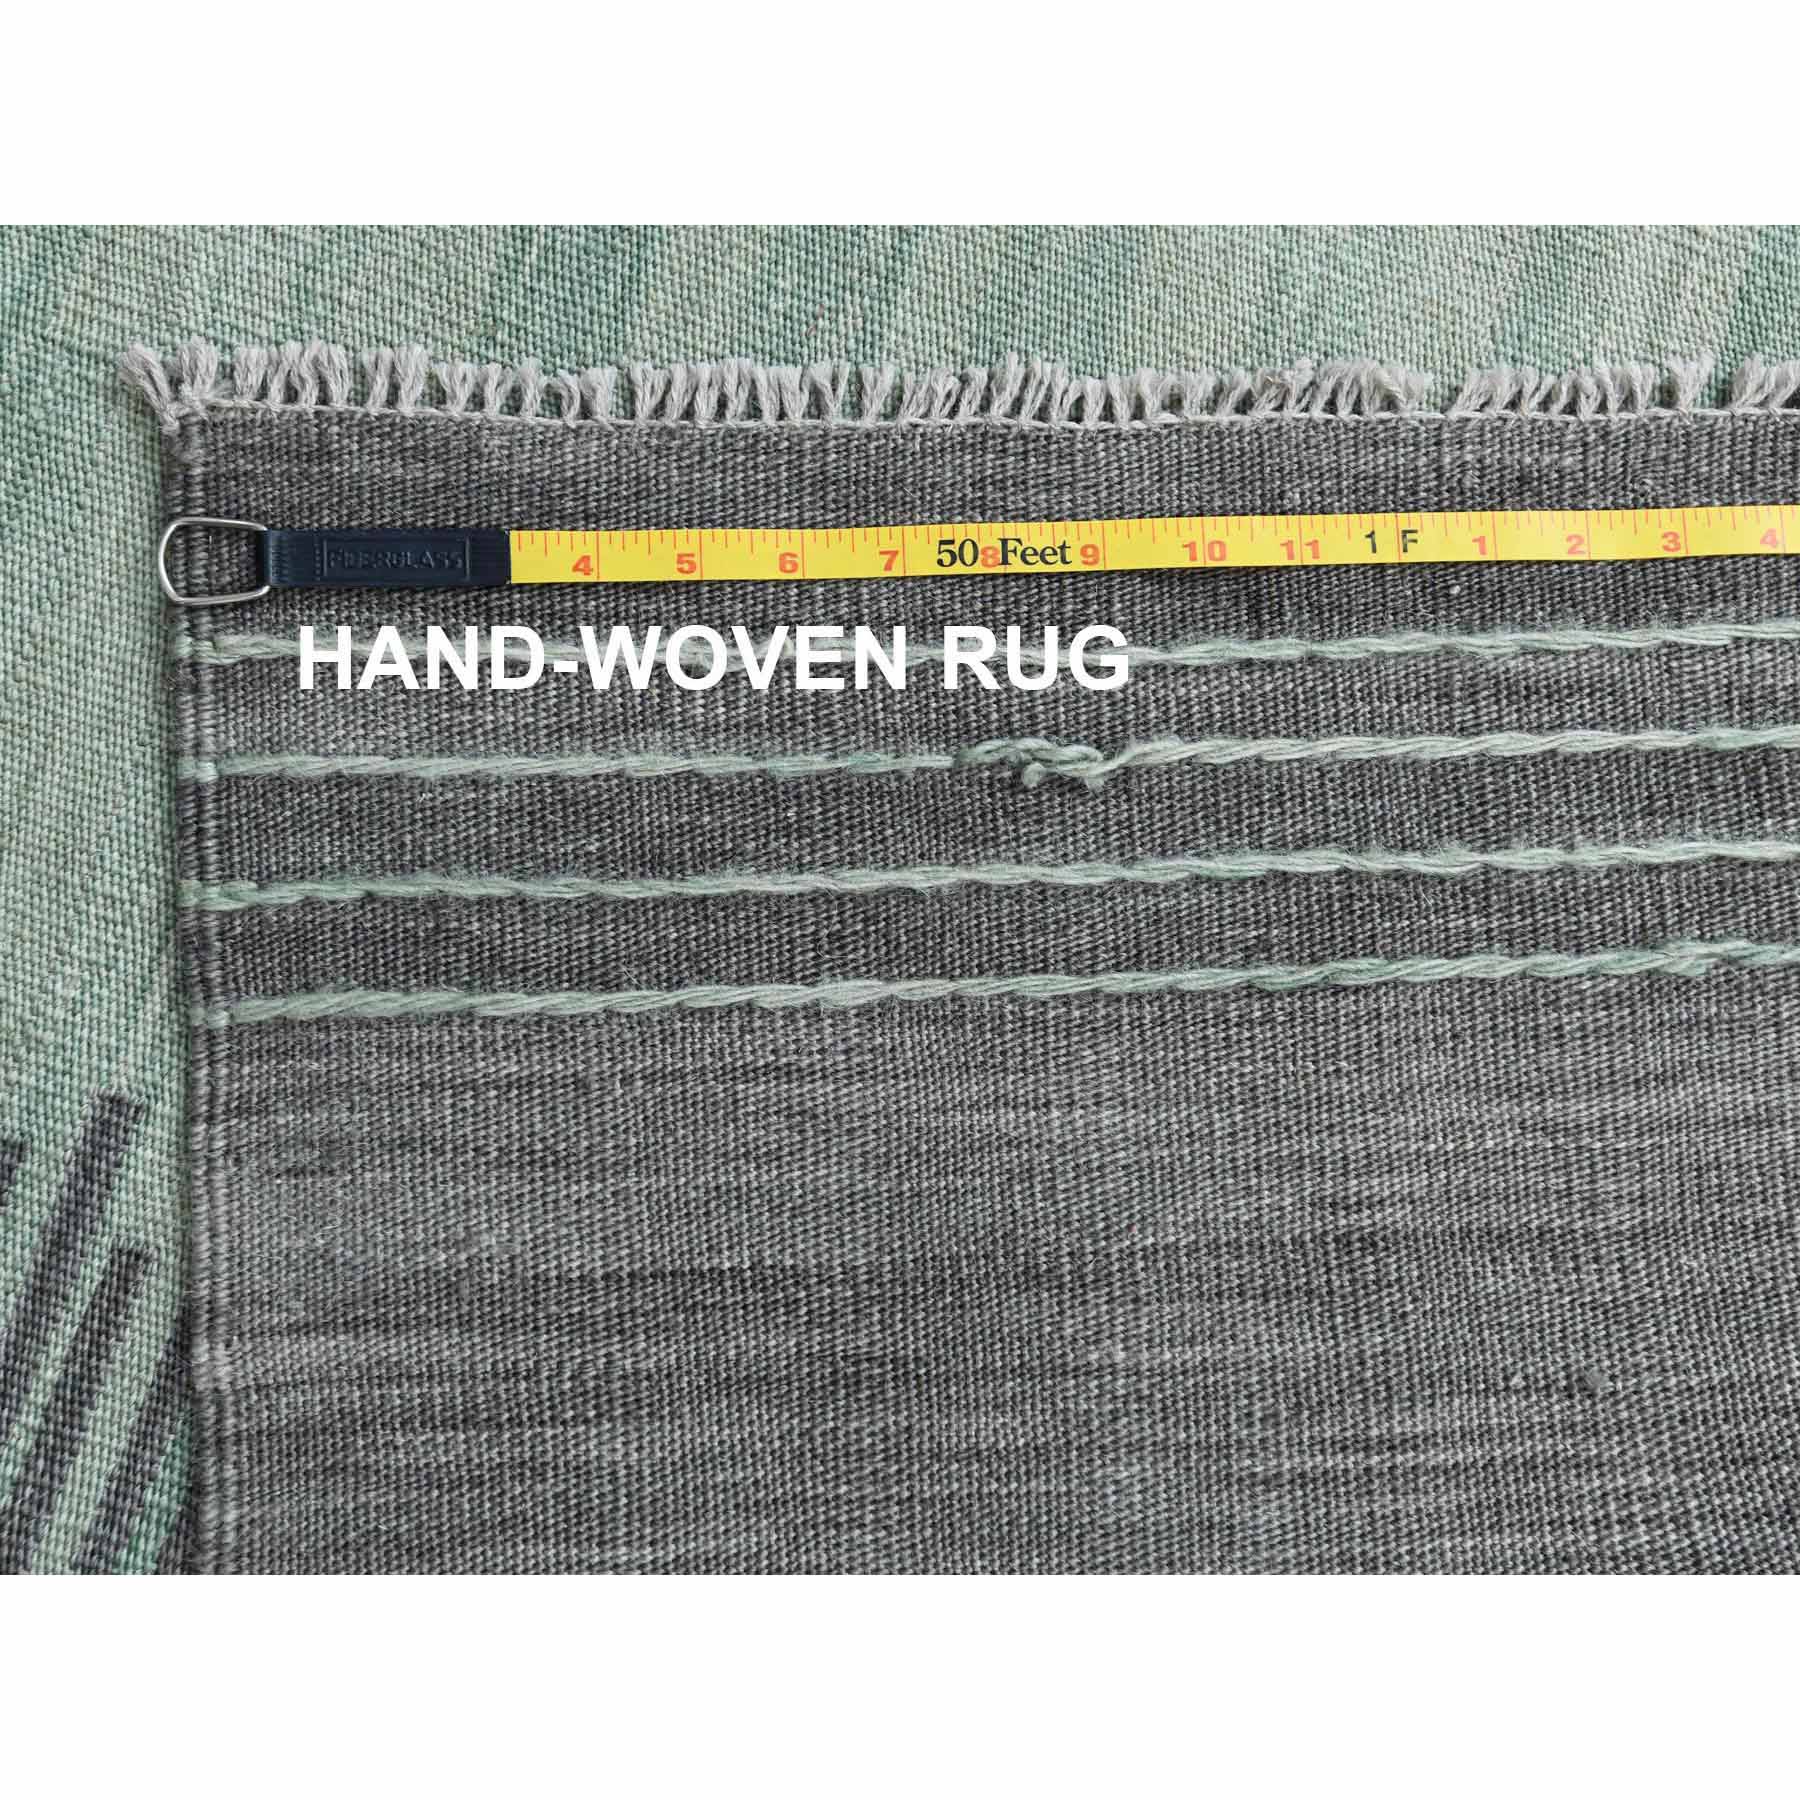 Flat-Weave-Hand-Woven-Rug-300120